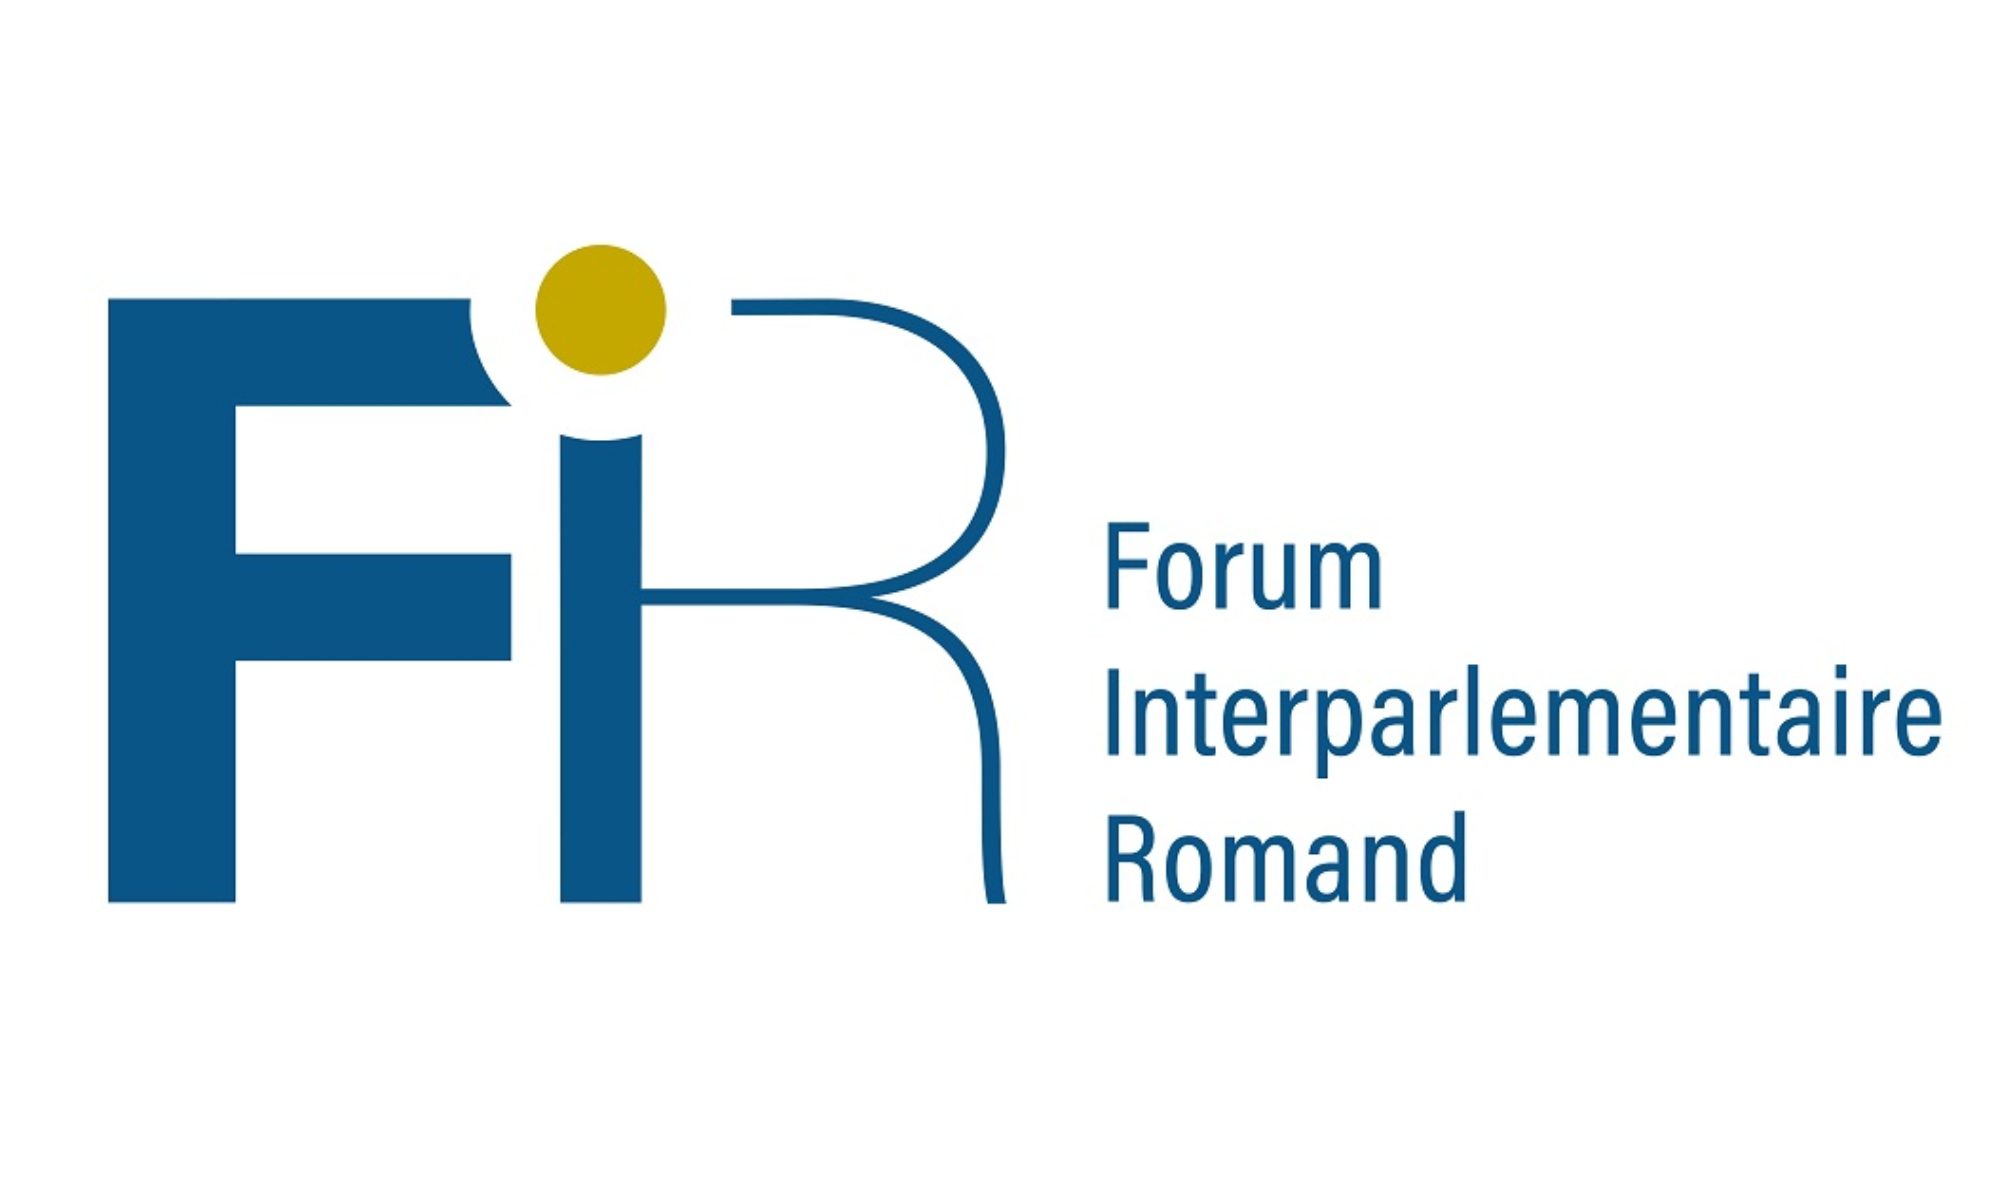 Forum interparlementaire romand